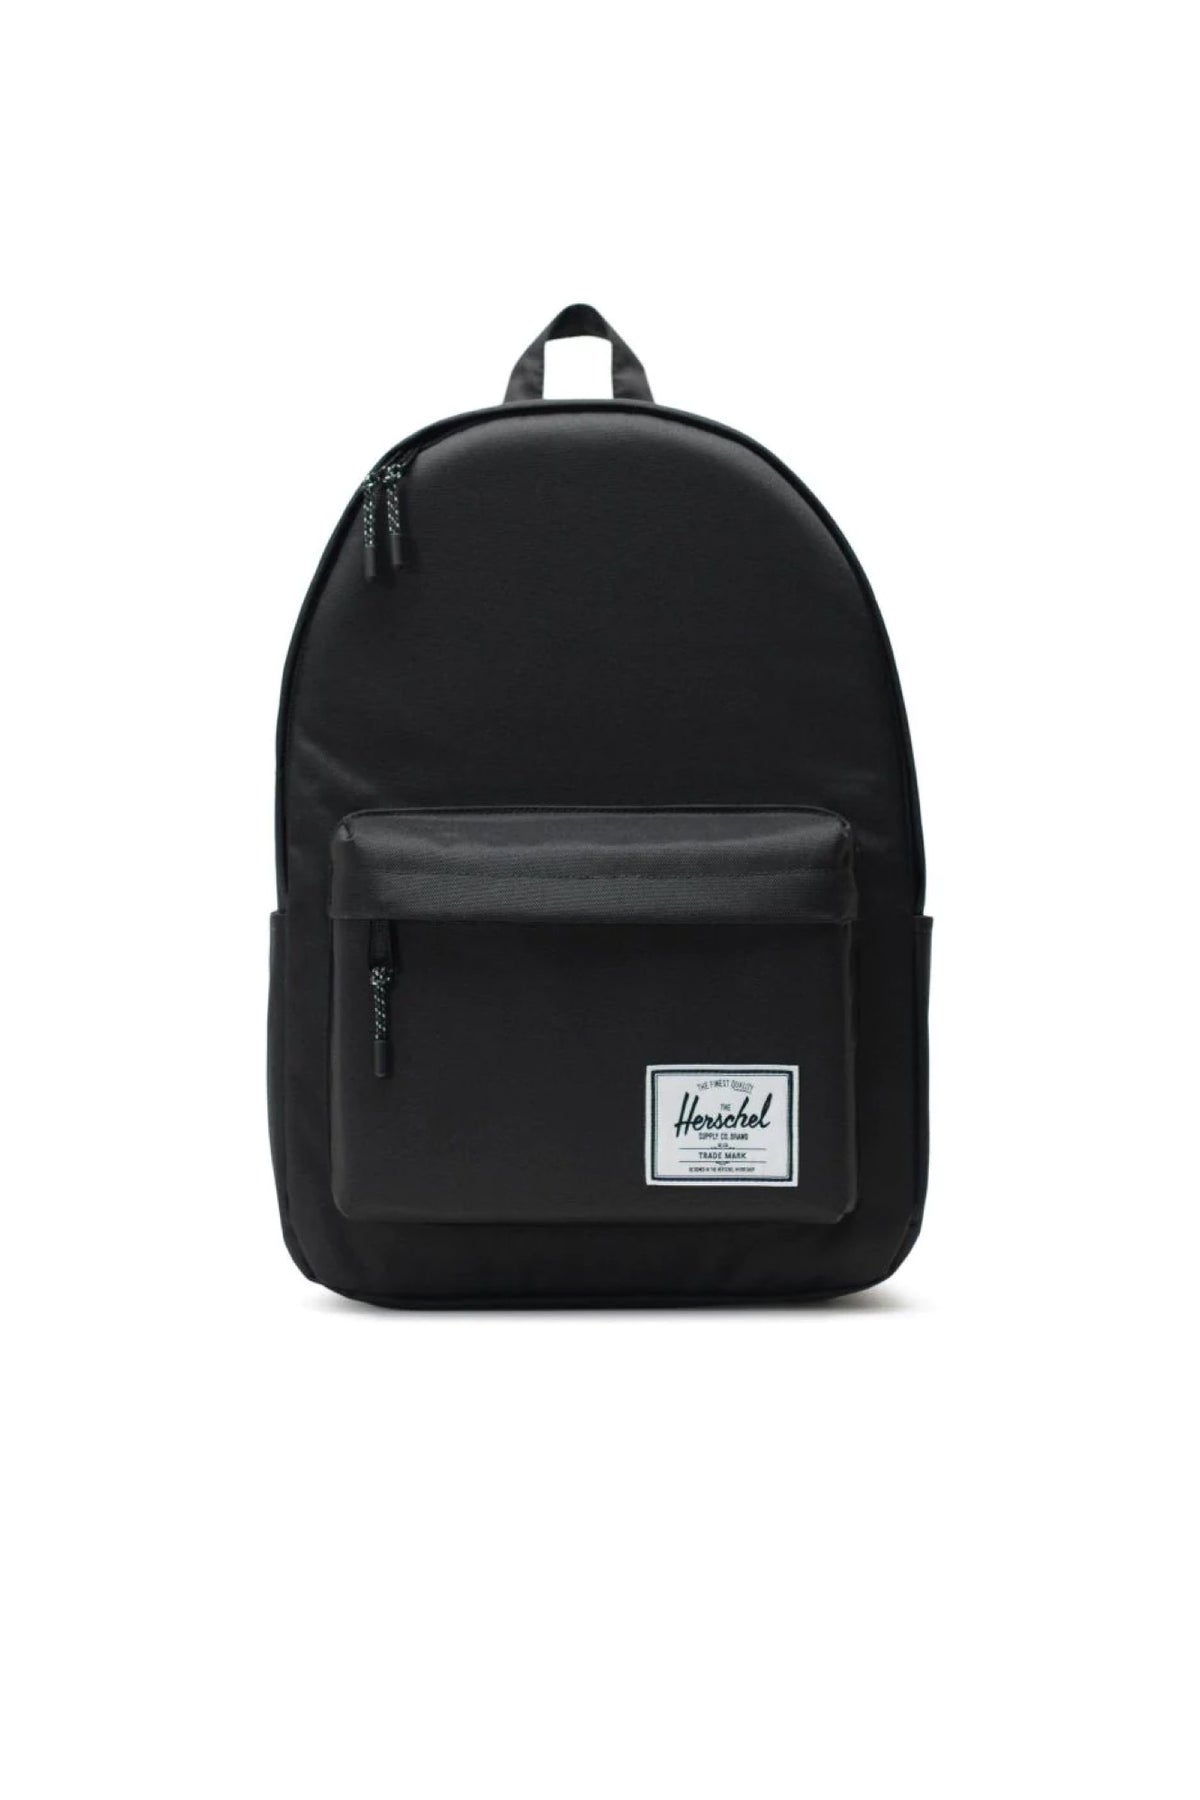 Herschel XL Classic Backpack Black